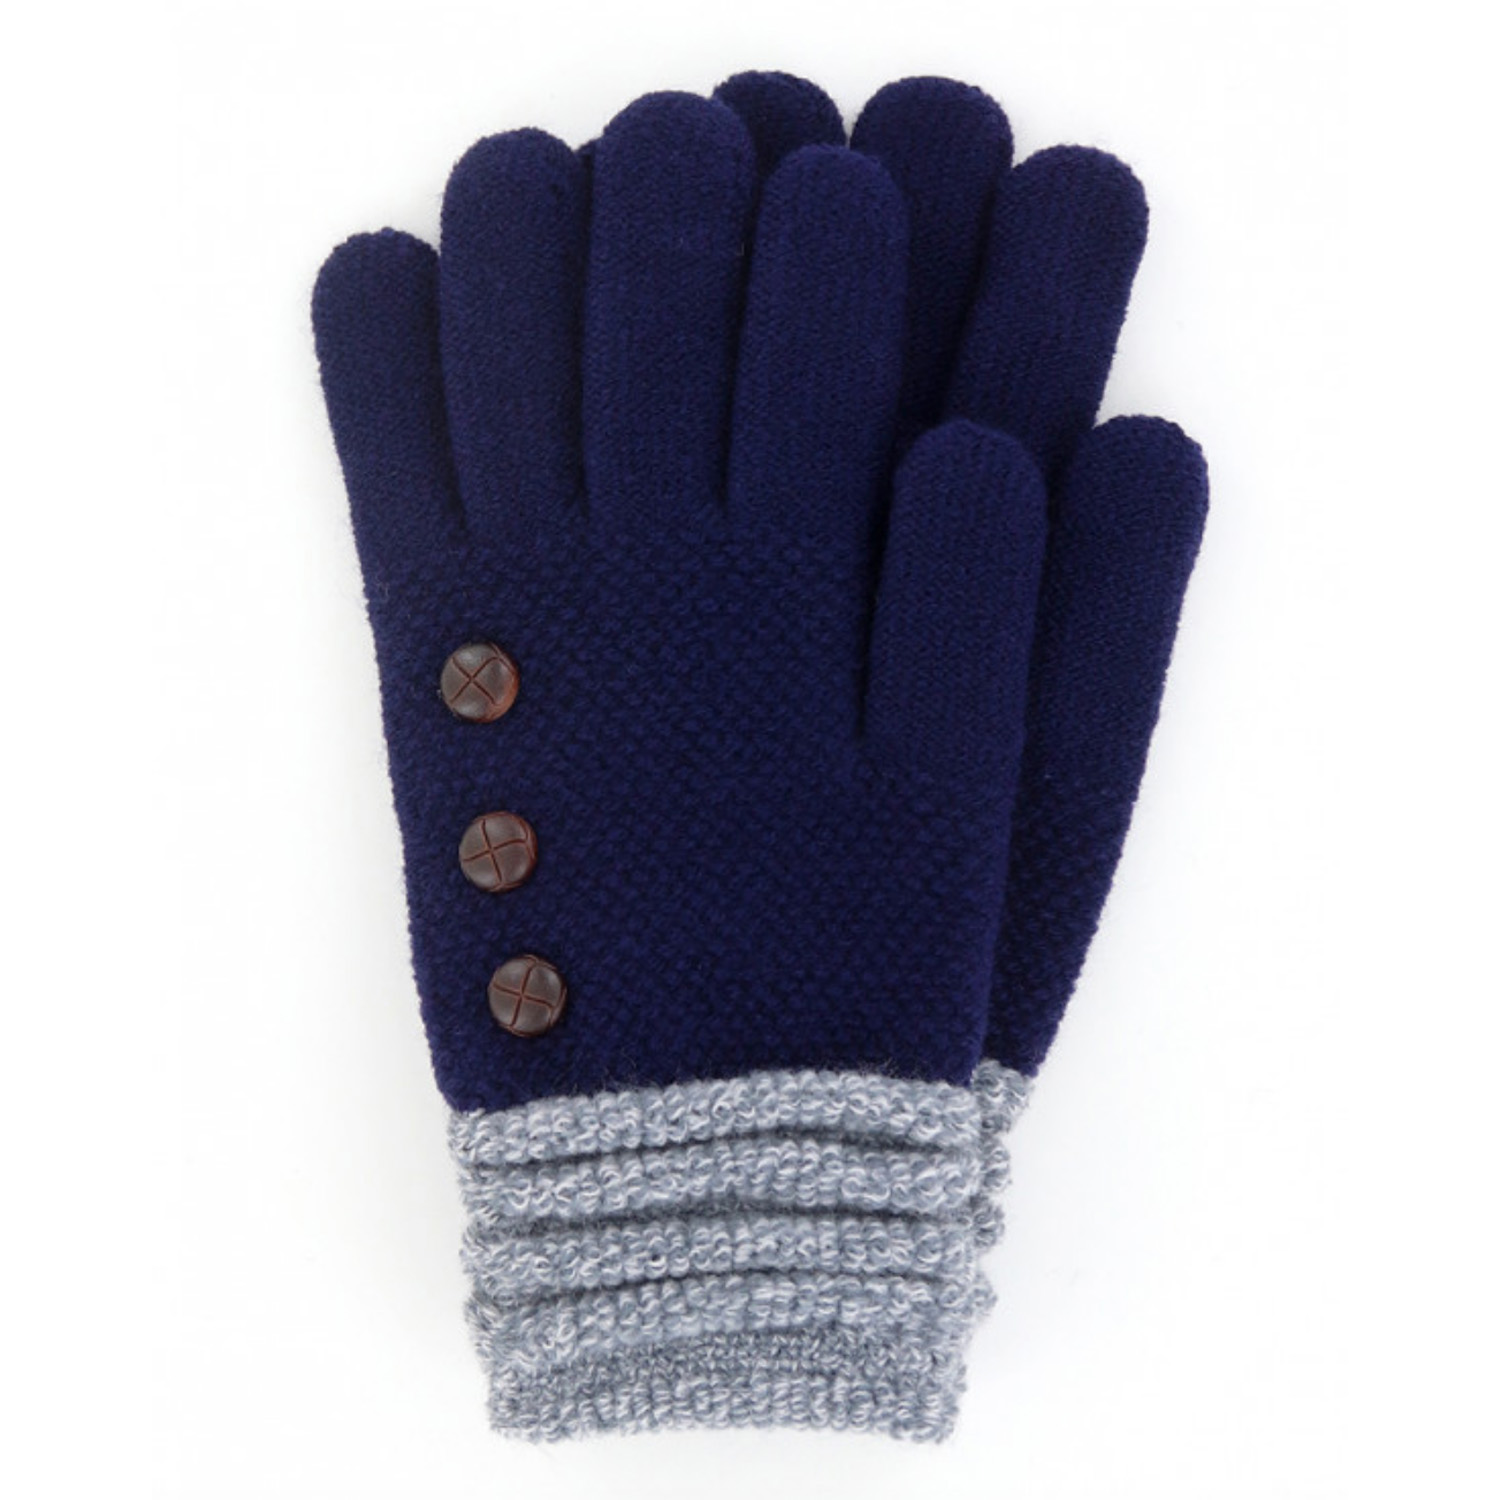 Britt's Knit's Knit Gloves Navy